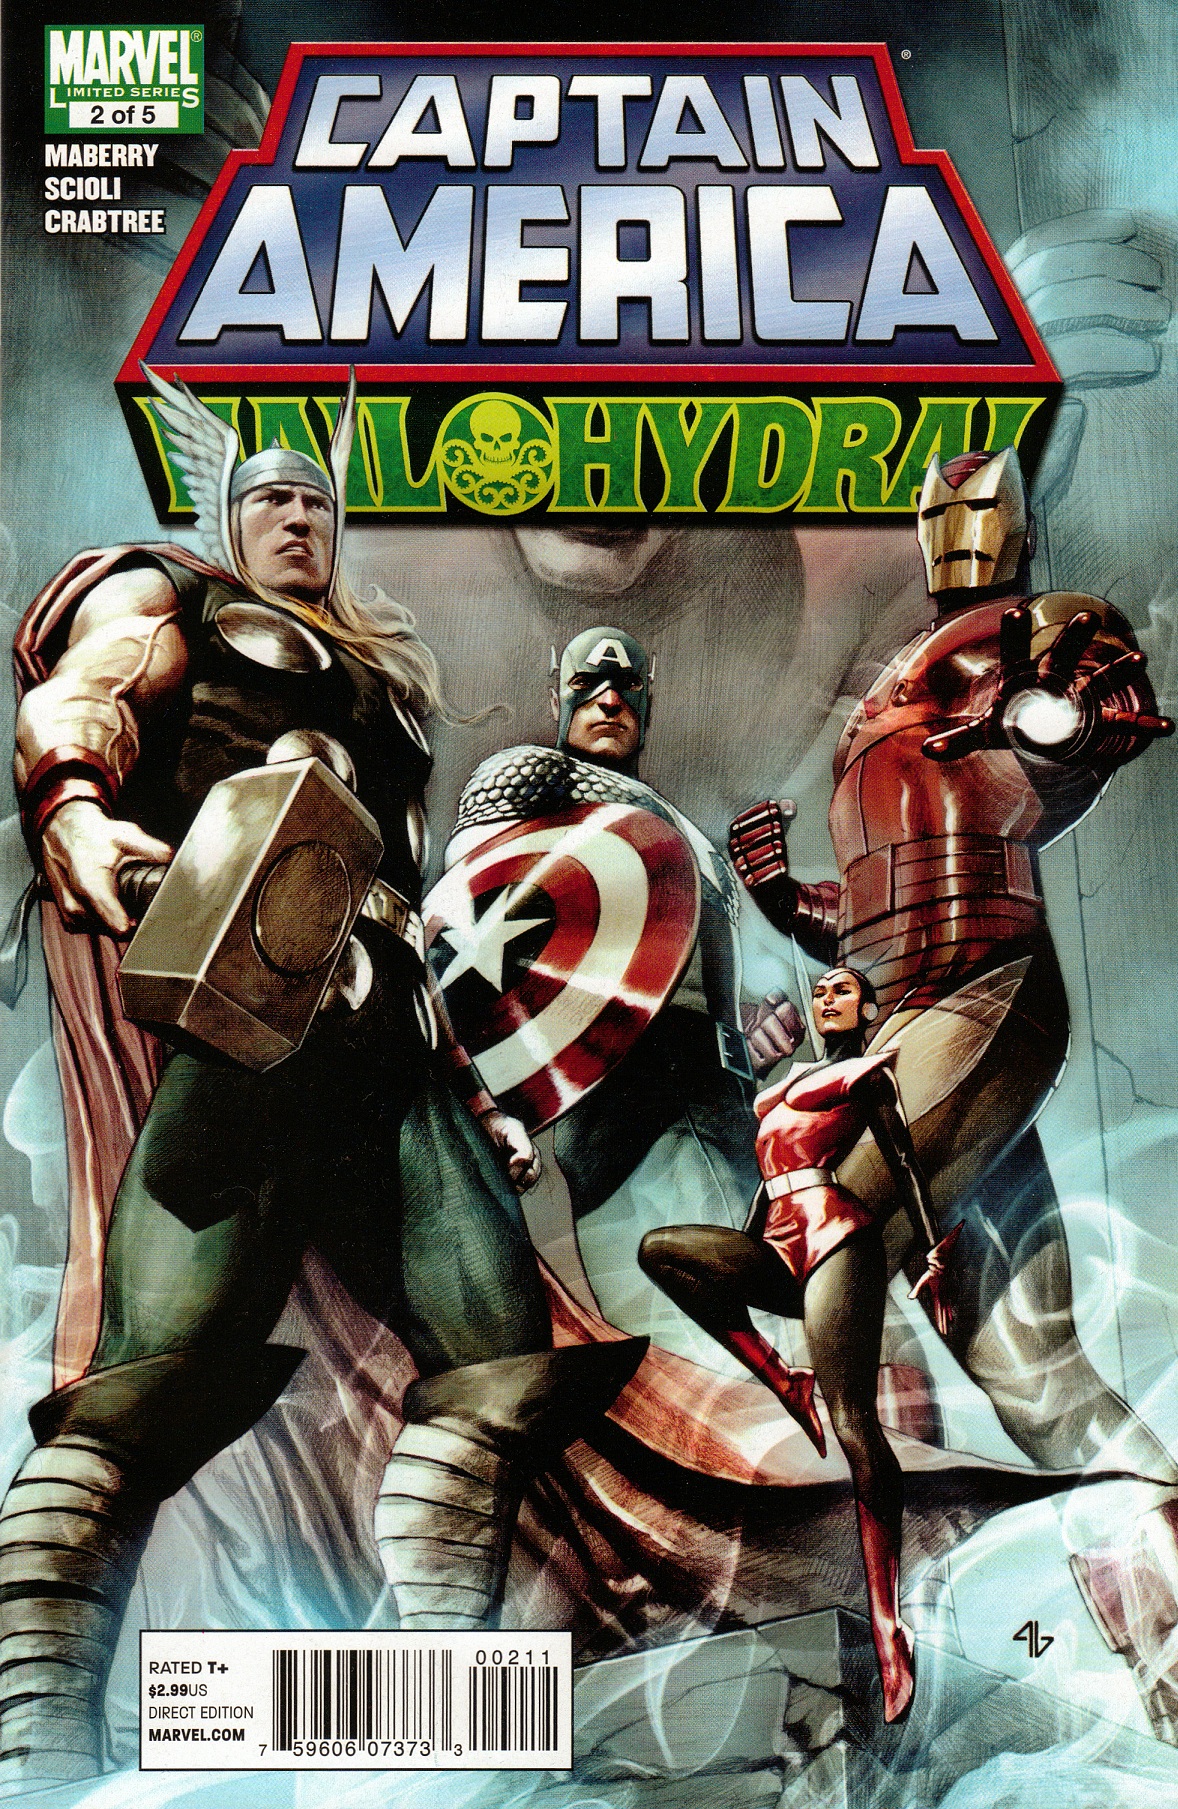 Captain America: Hail Hydra Vol 1 2 | Marvel Database | FANDOM powered by Wikia